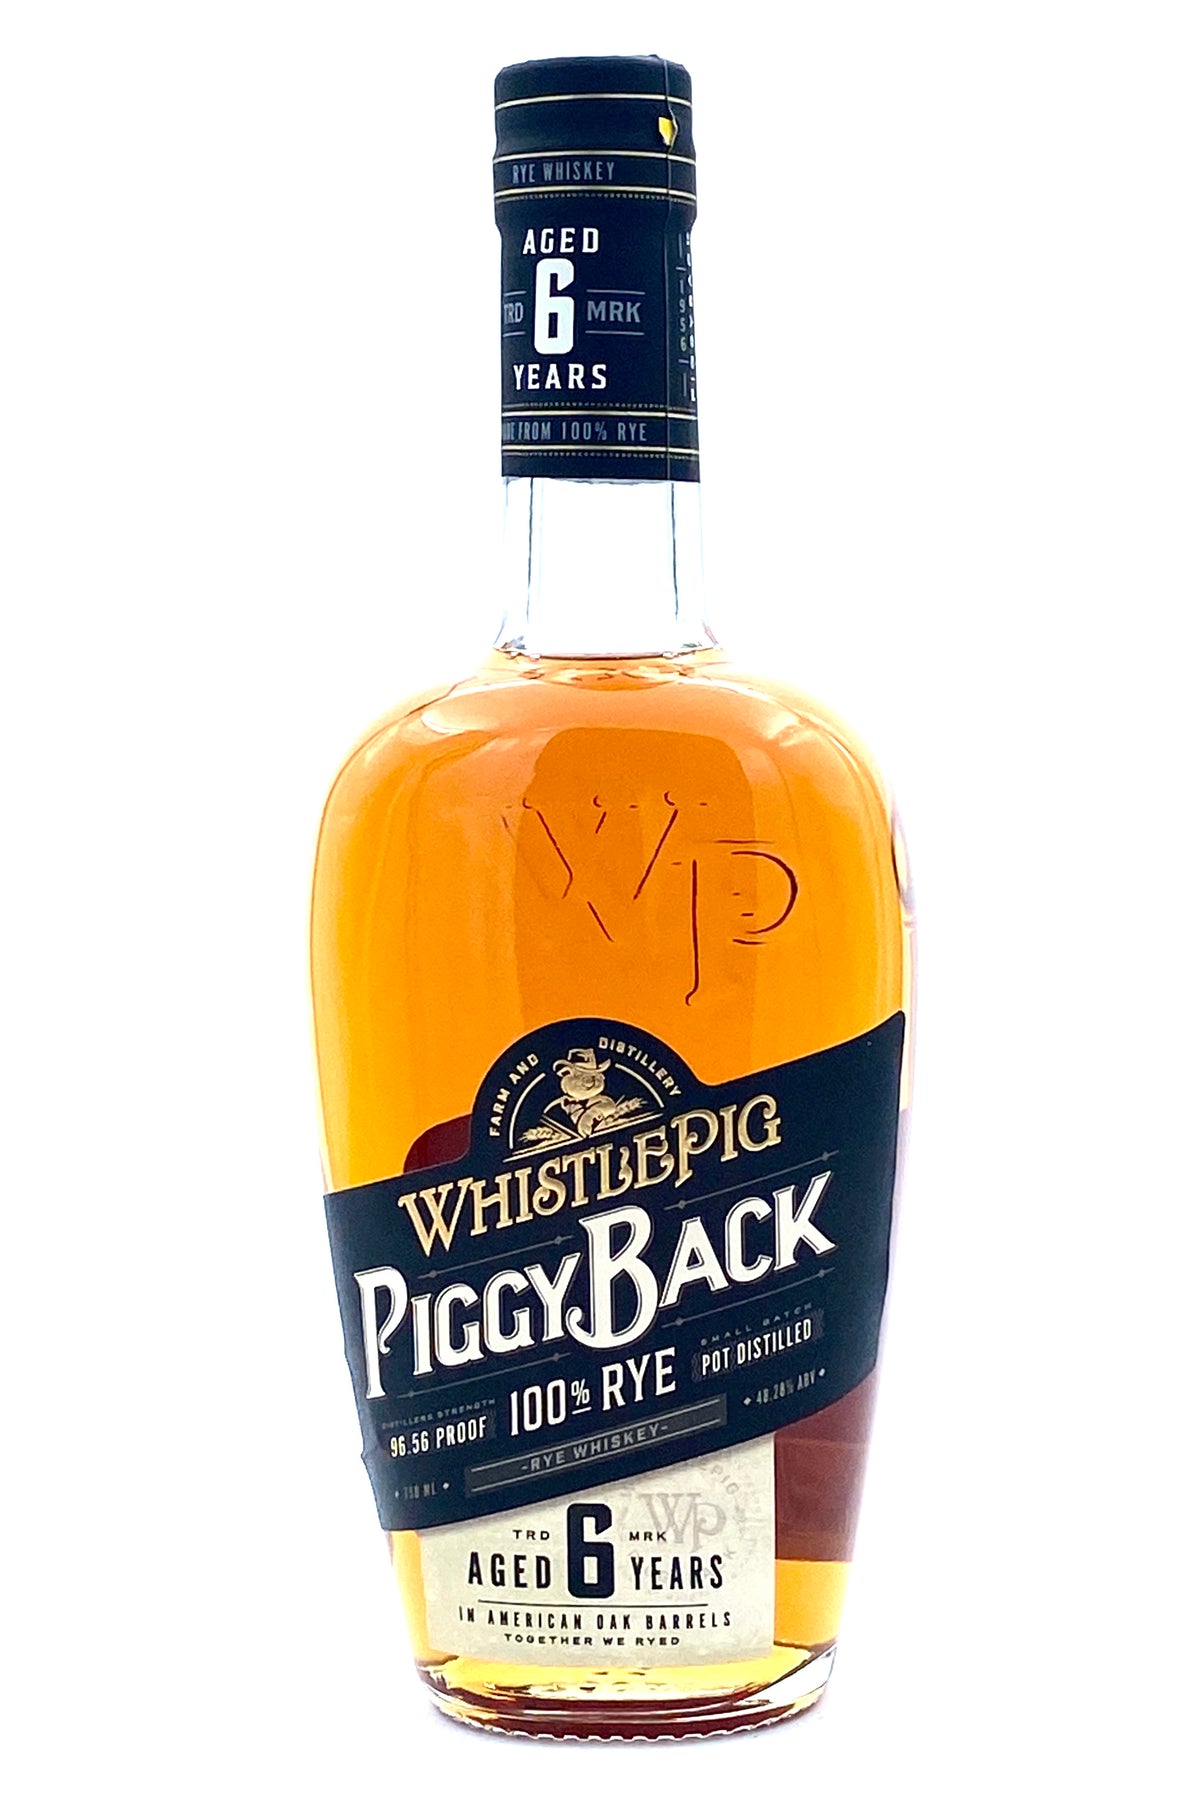 WhistlePig Piggyback 6 Years Old 100% Rye Whiskey